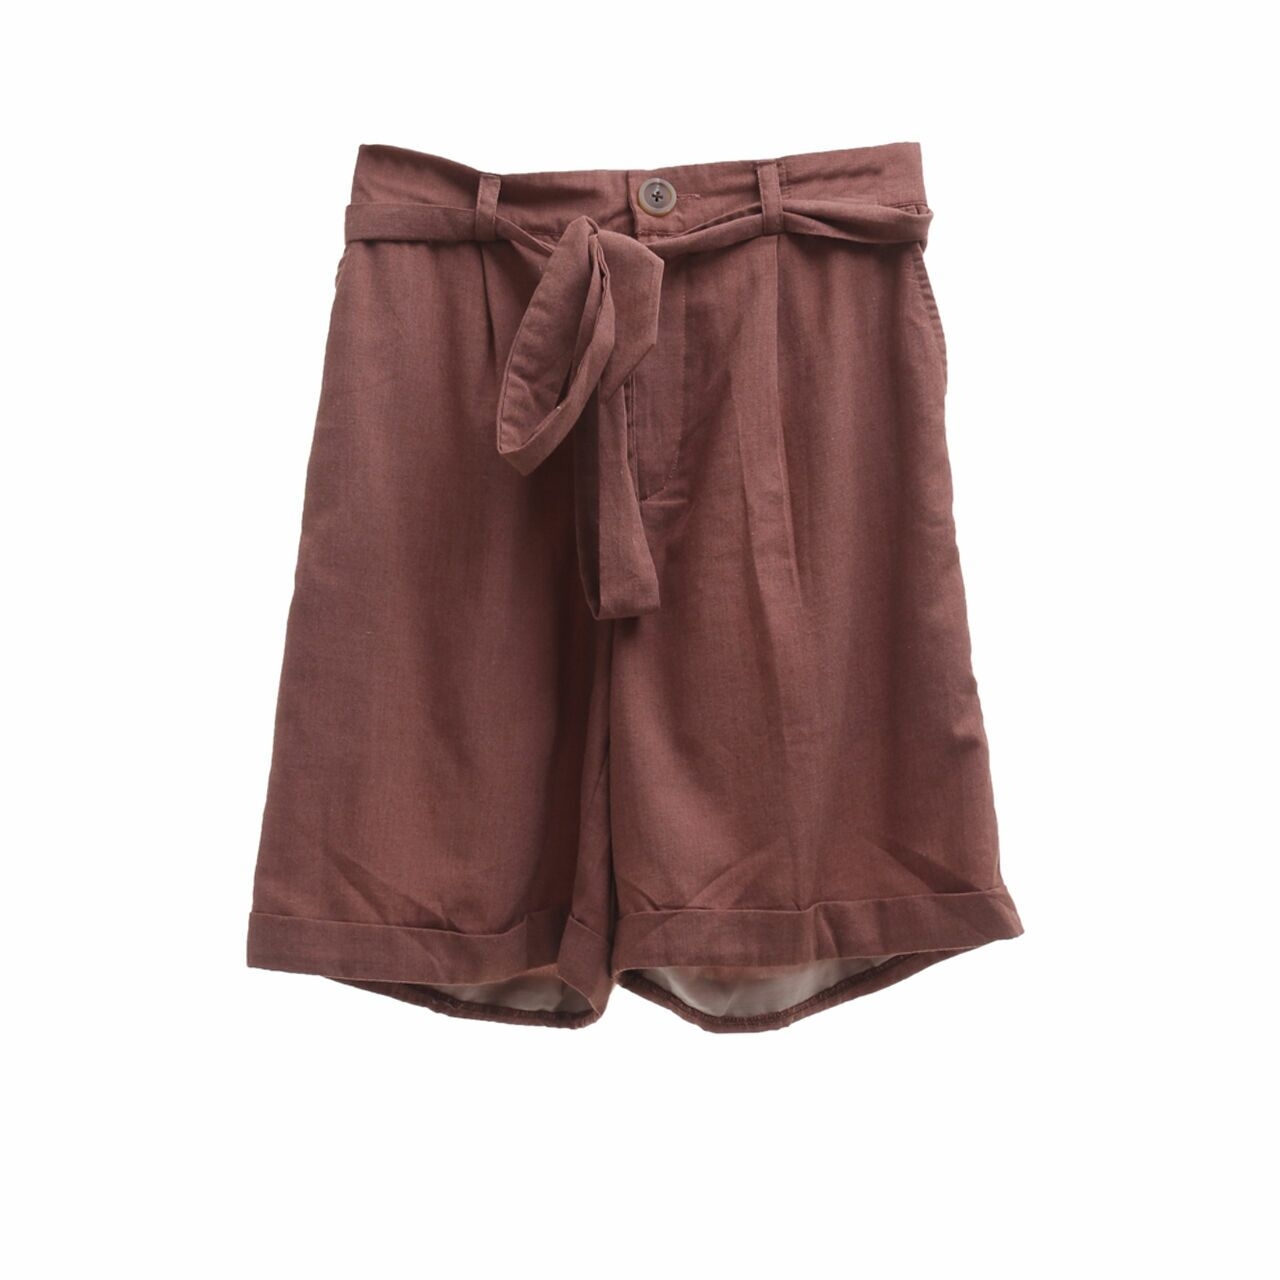 Chic & Darling Brown Shorts